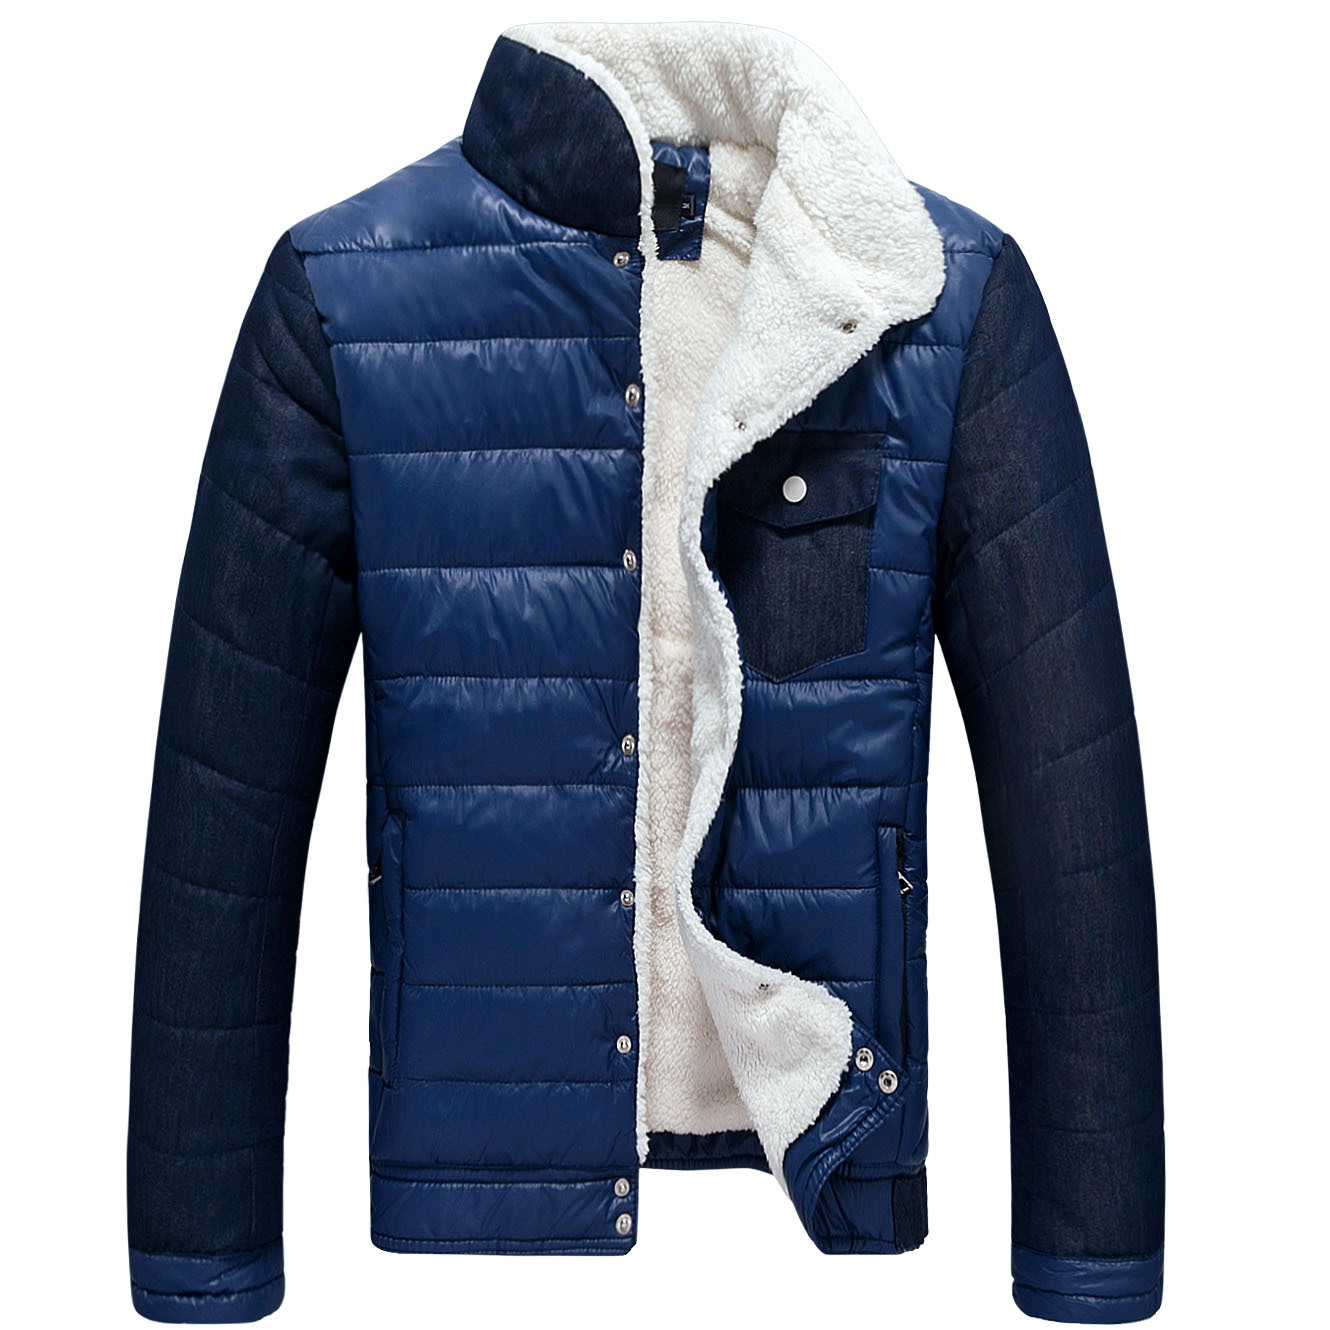 Men s winter clothes new collar color coat jacket youth SC coat large spot